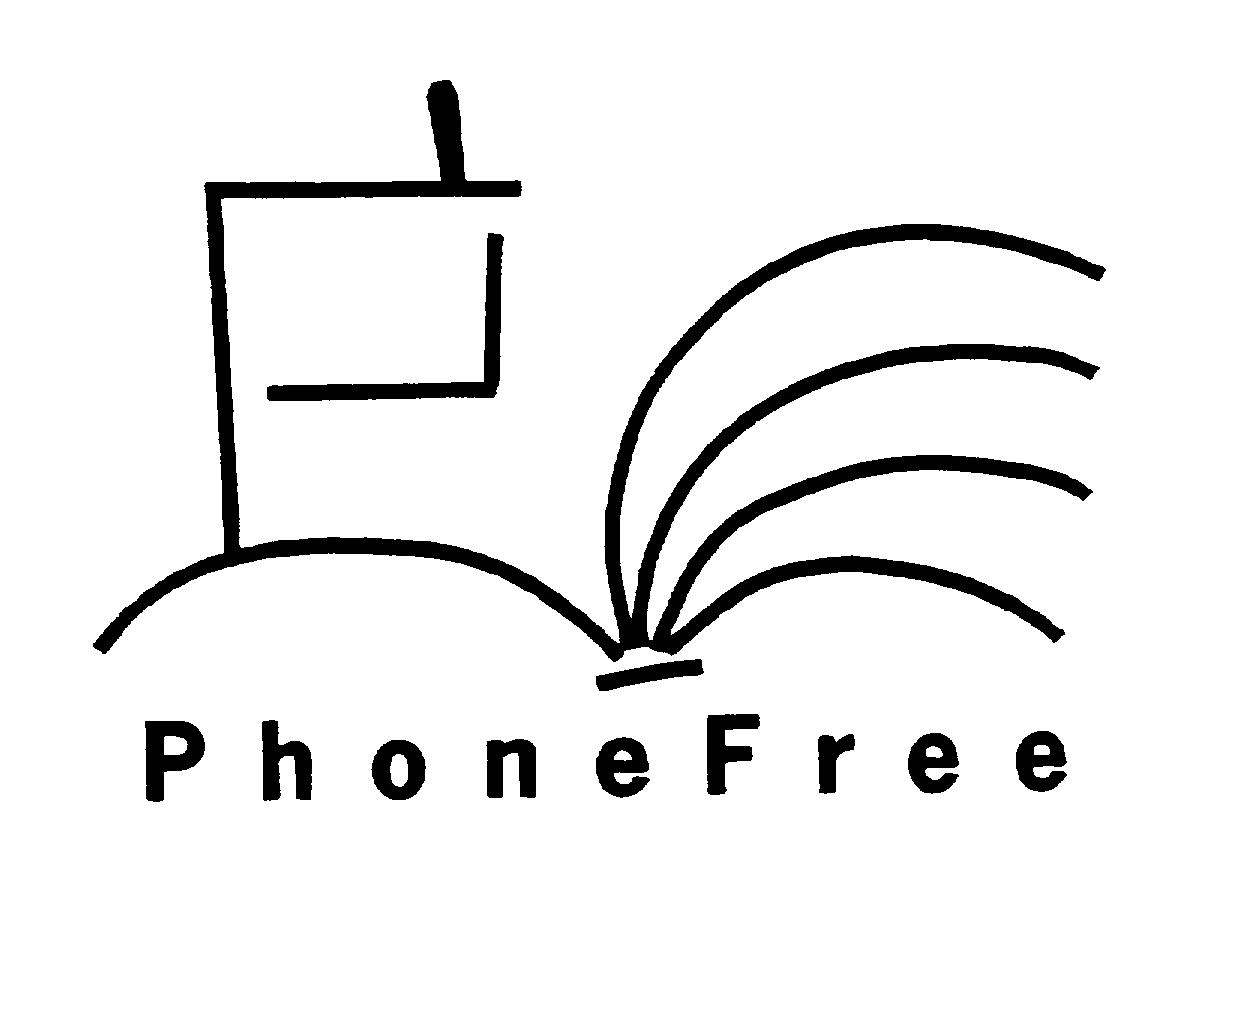  PHONE FREE